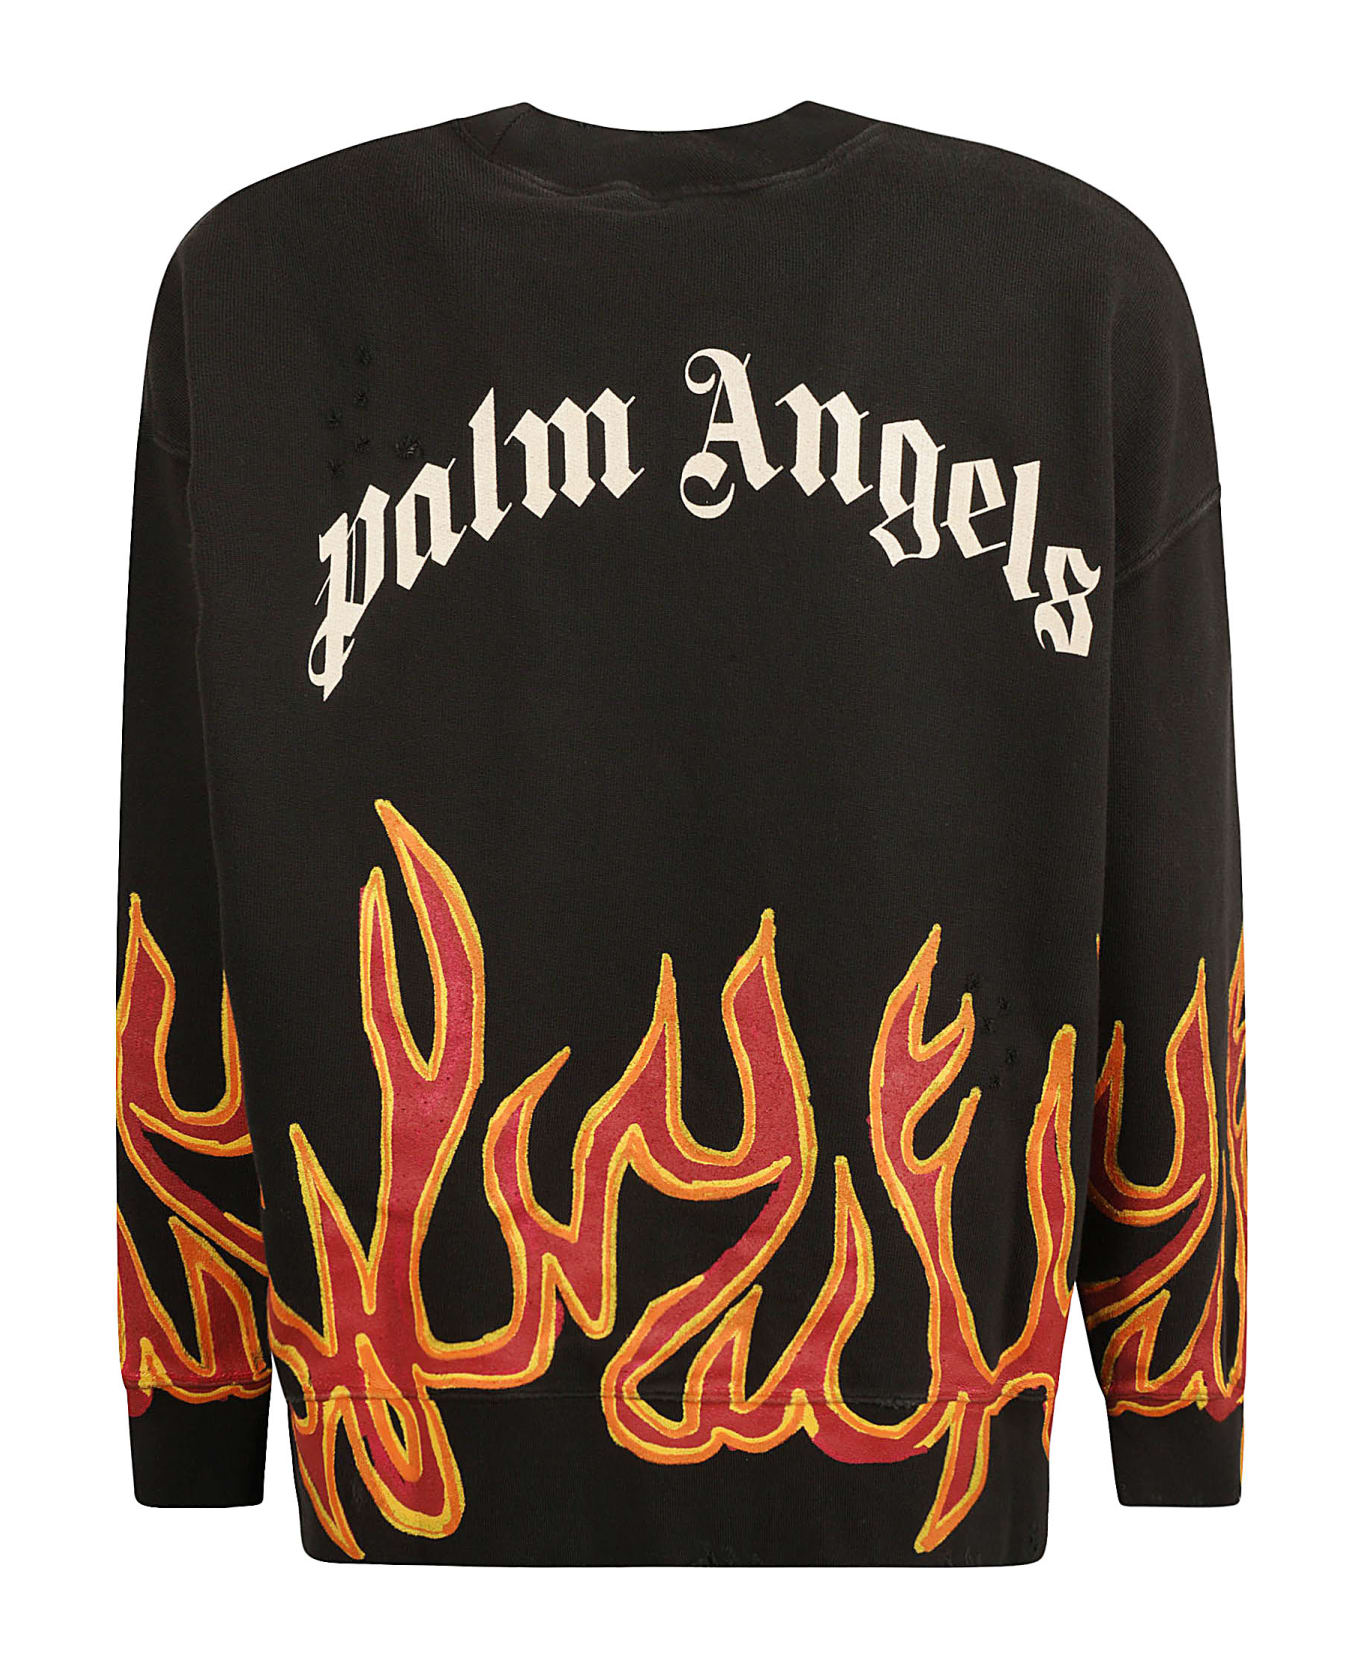 Palm Angels Flames Graffiti Crewneck Sweatshirt - Black/Red